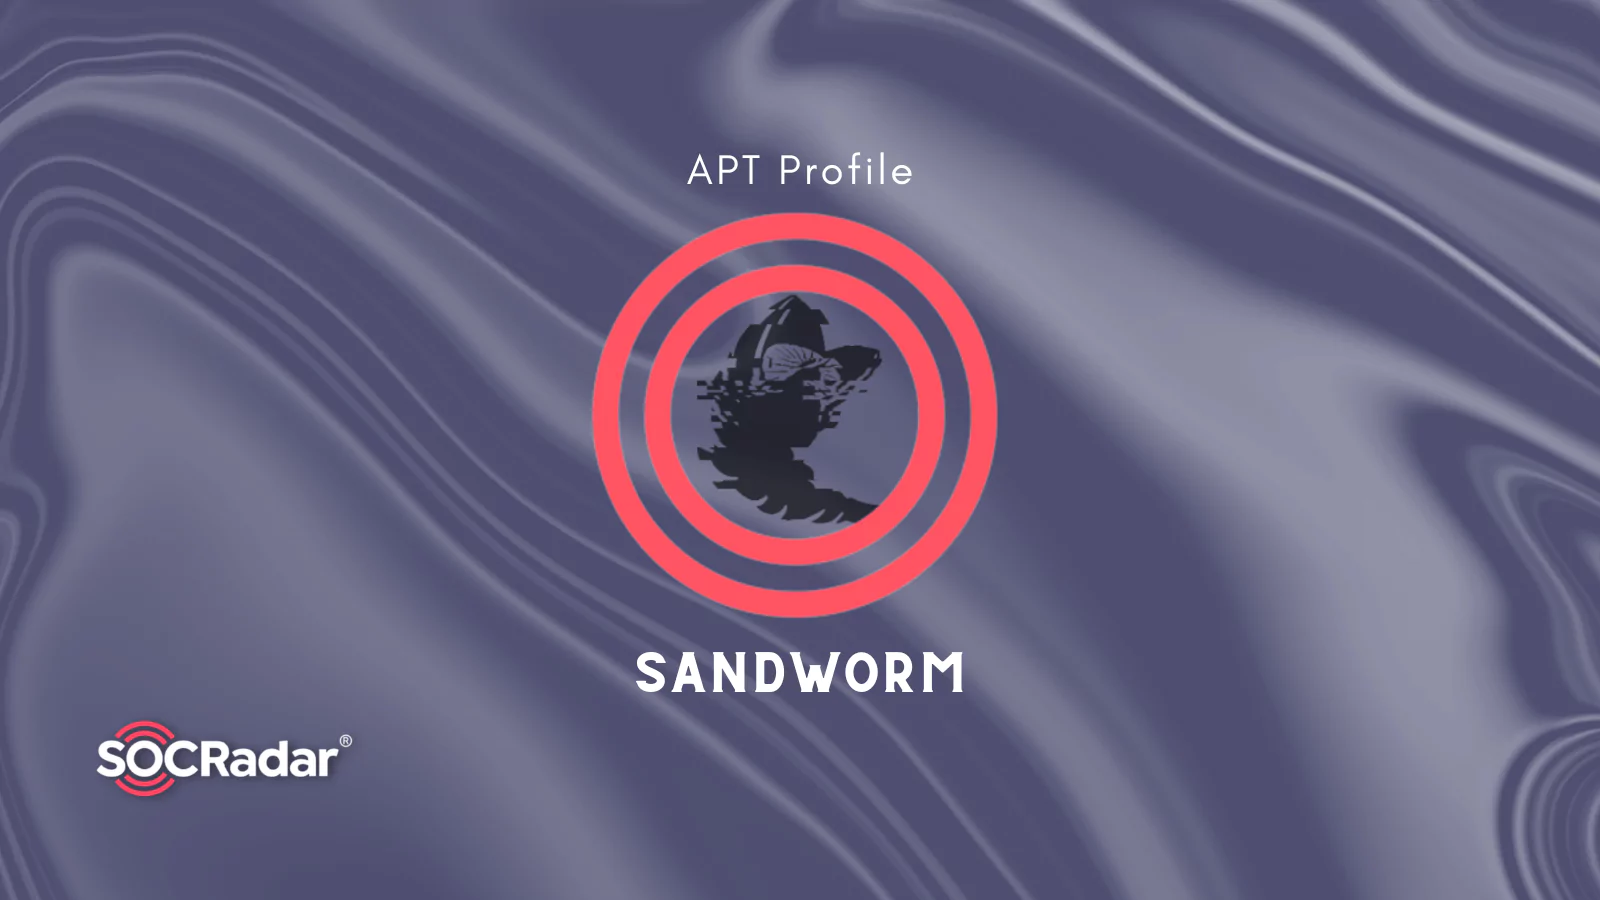 APT Profile: Sandworm - SOCRadar® Cyber Intelligence Inc.